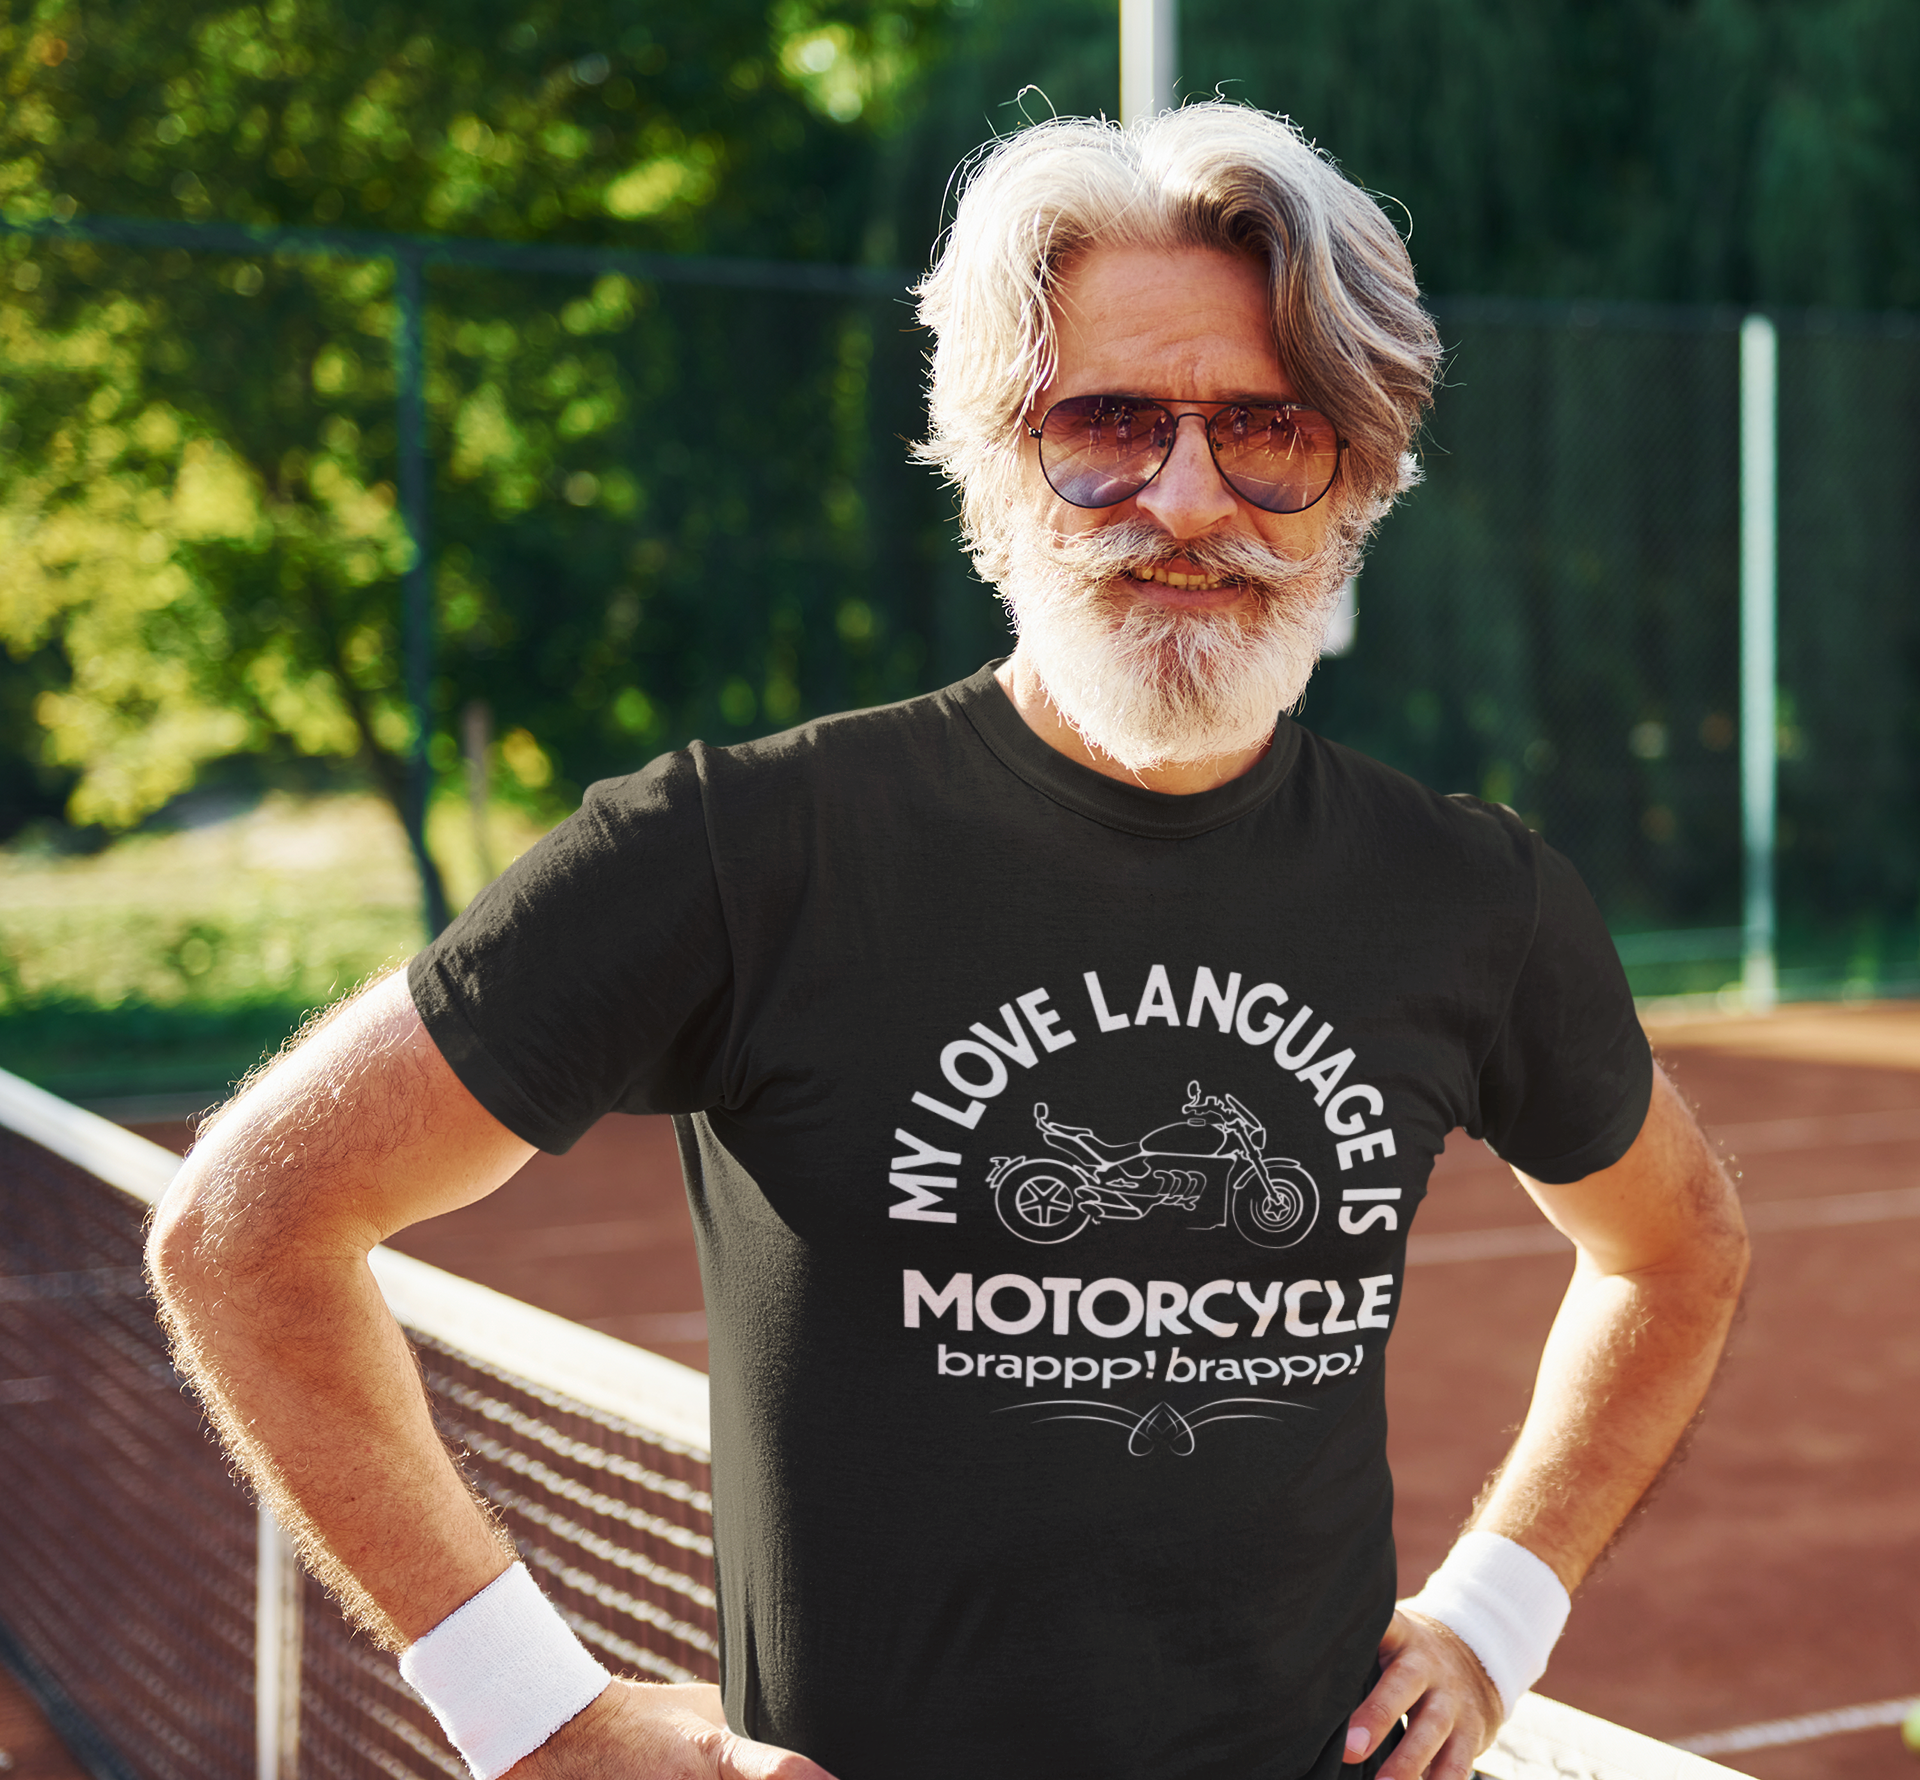 "My Love Language is Motorcycle" (Dark) Tee Shirt